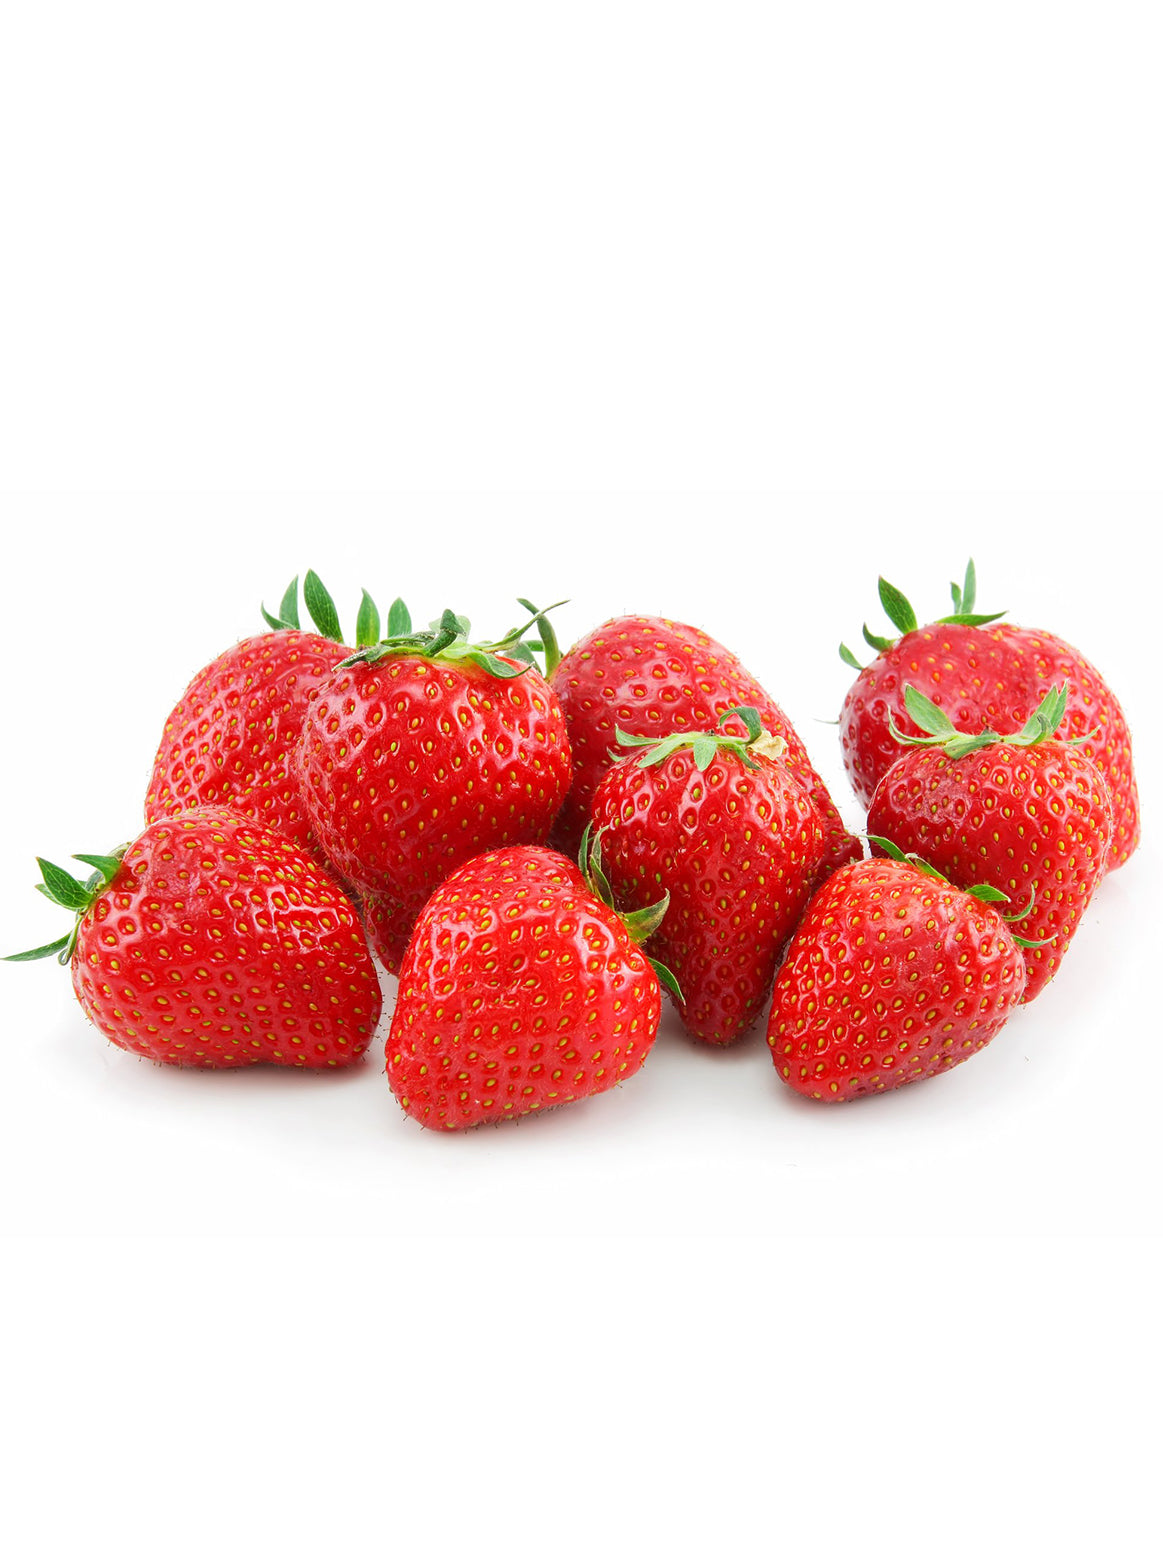 Organic Strawberries - each